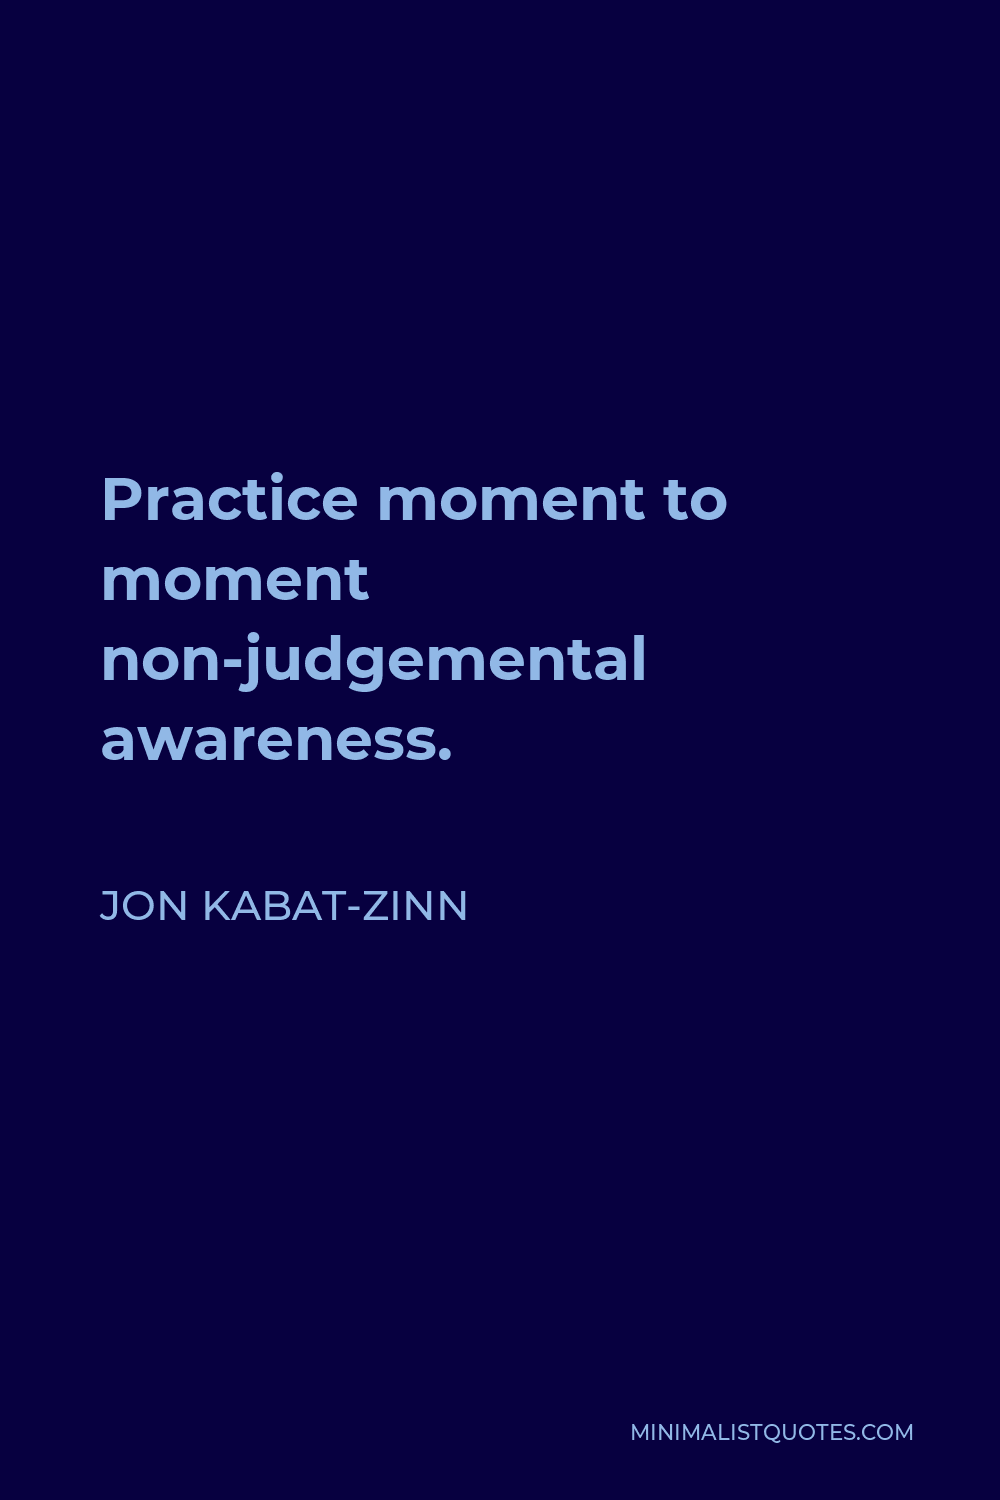 Jon Kabat-Zinn Quote - Practice moment to moment non-judgemental awareness.